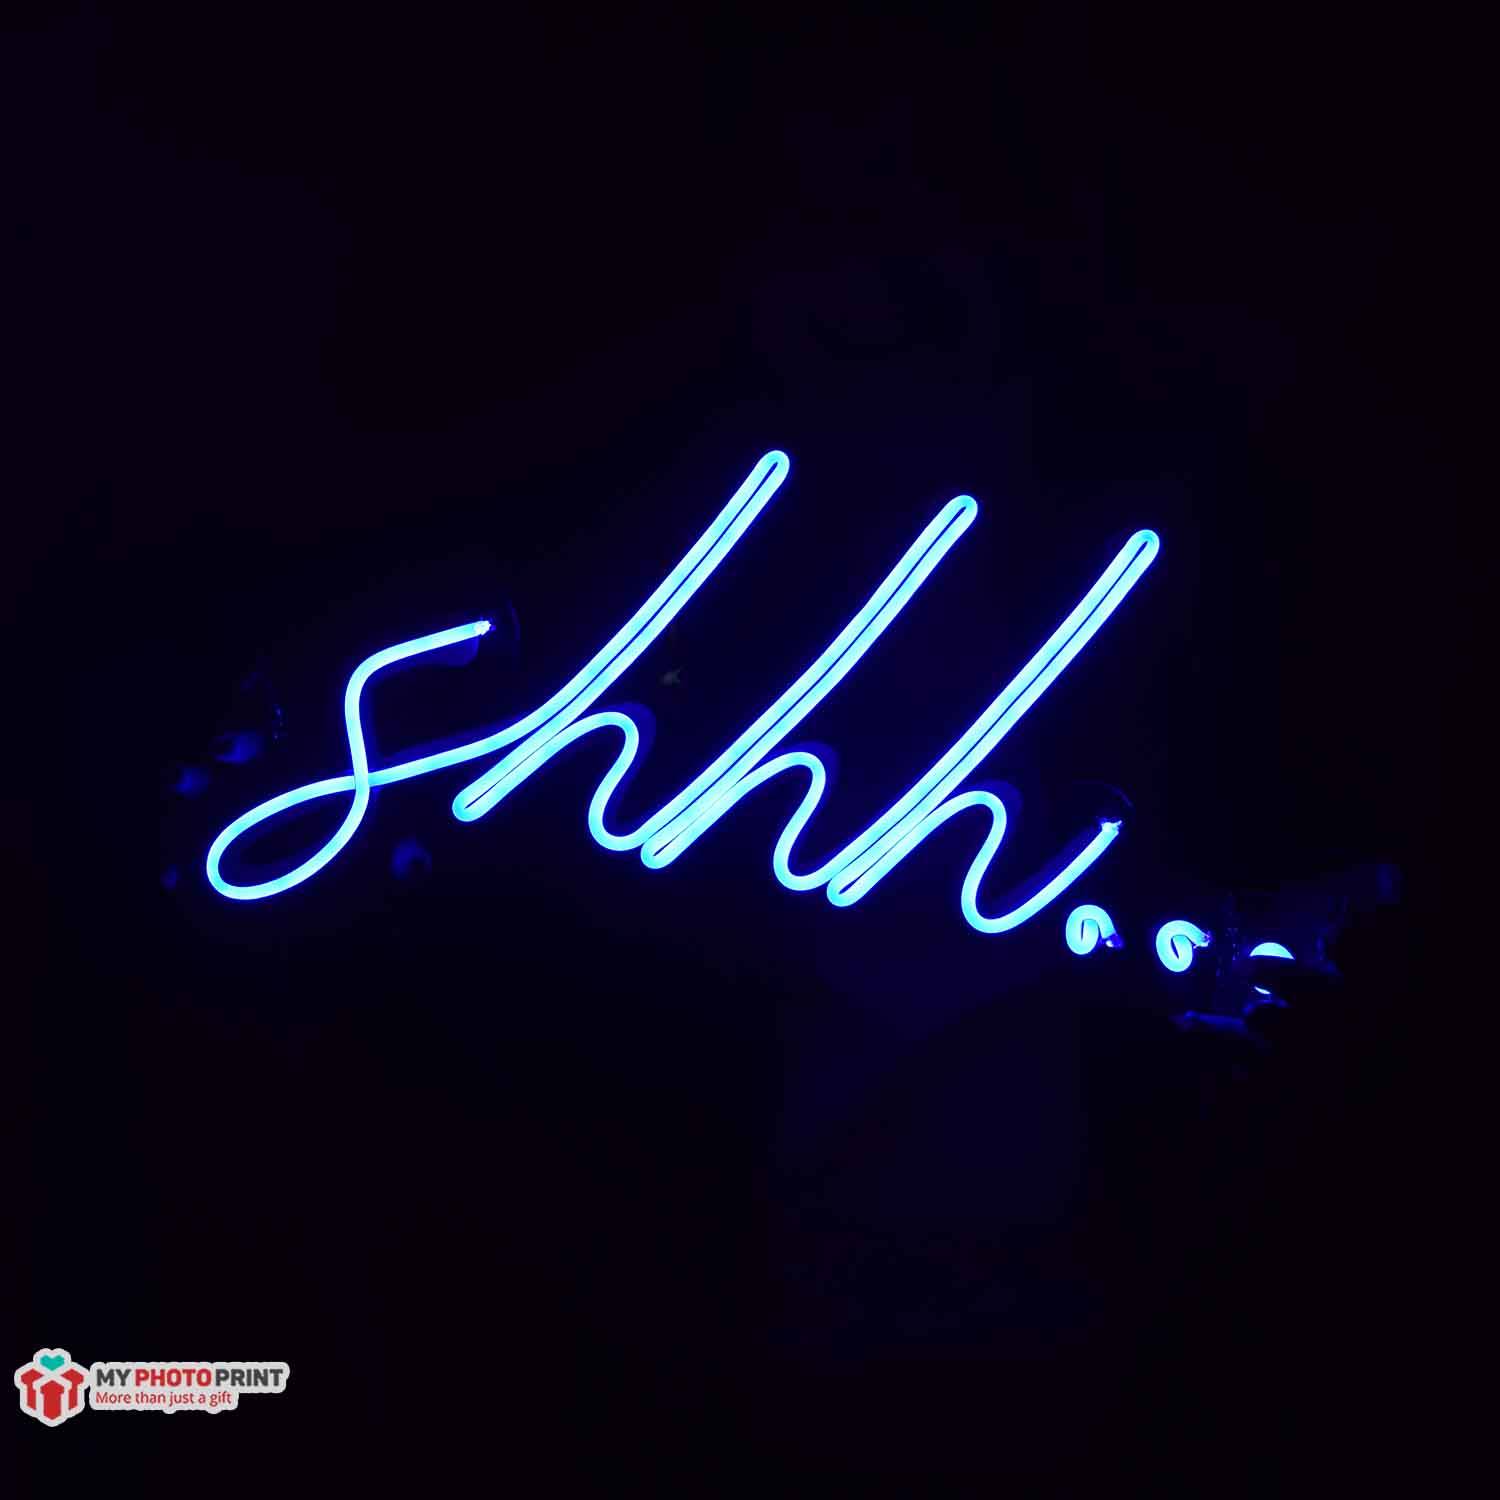 Neon Shhh... Led Neon Sign Decorative Lights Wall Decor